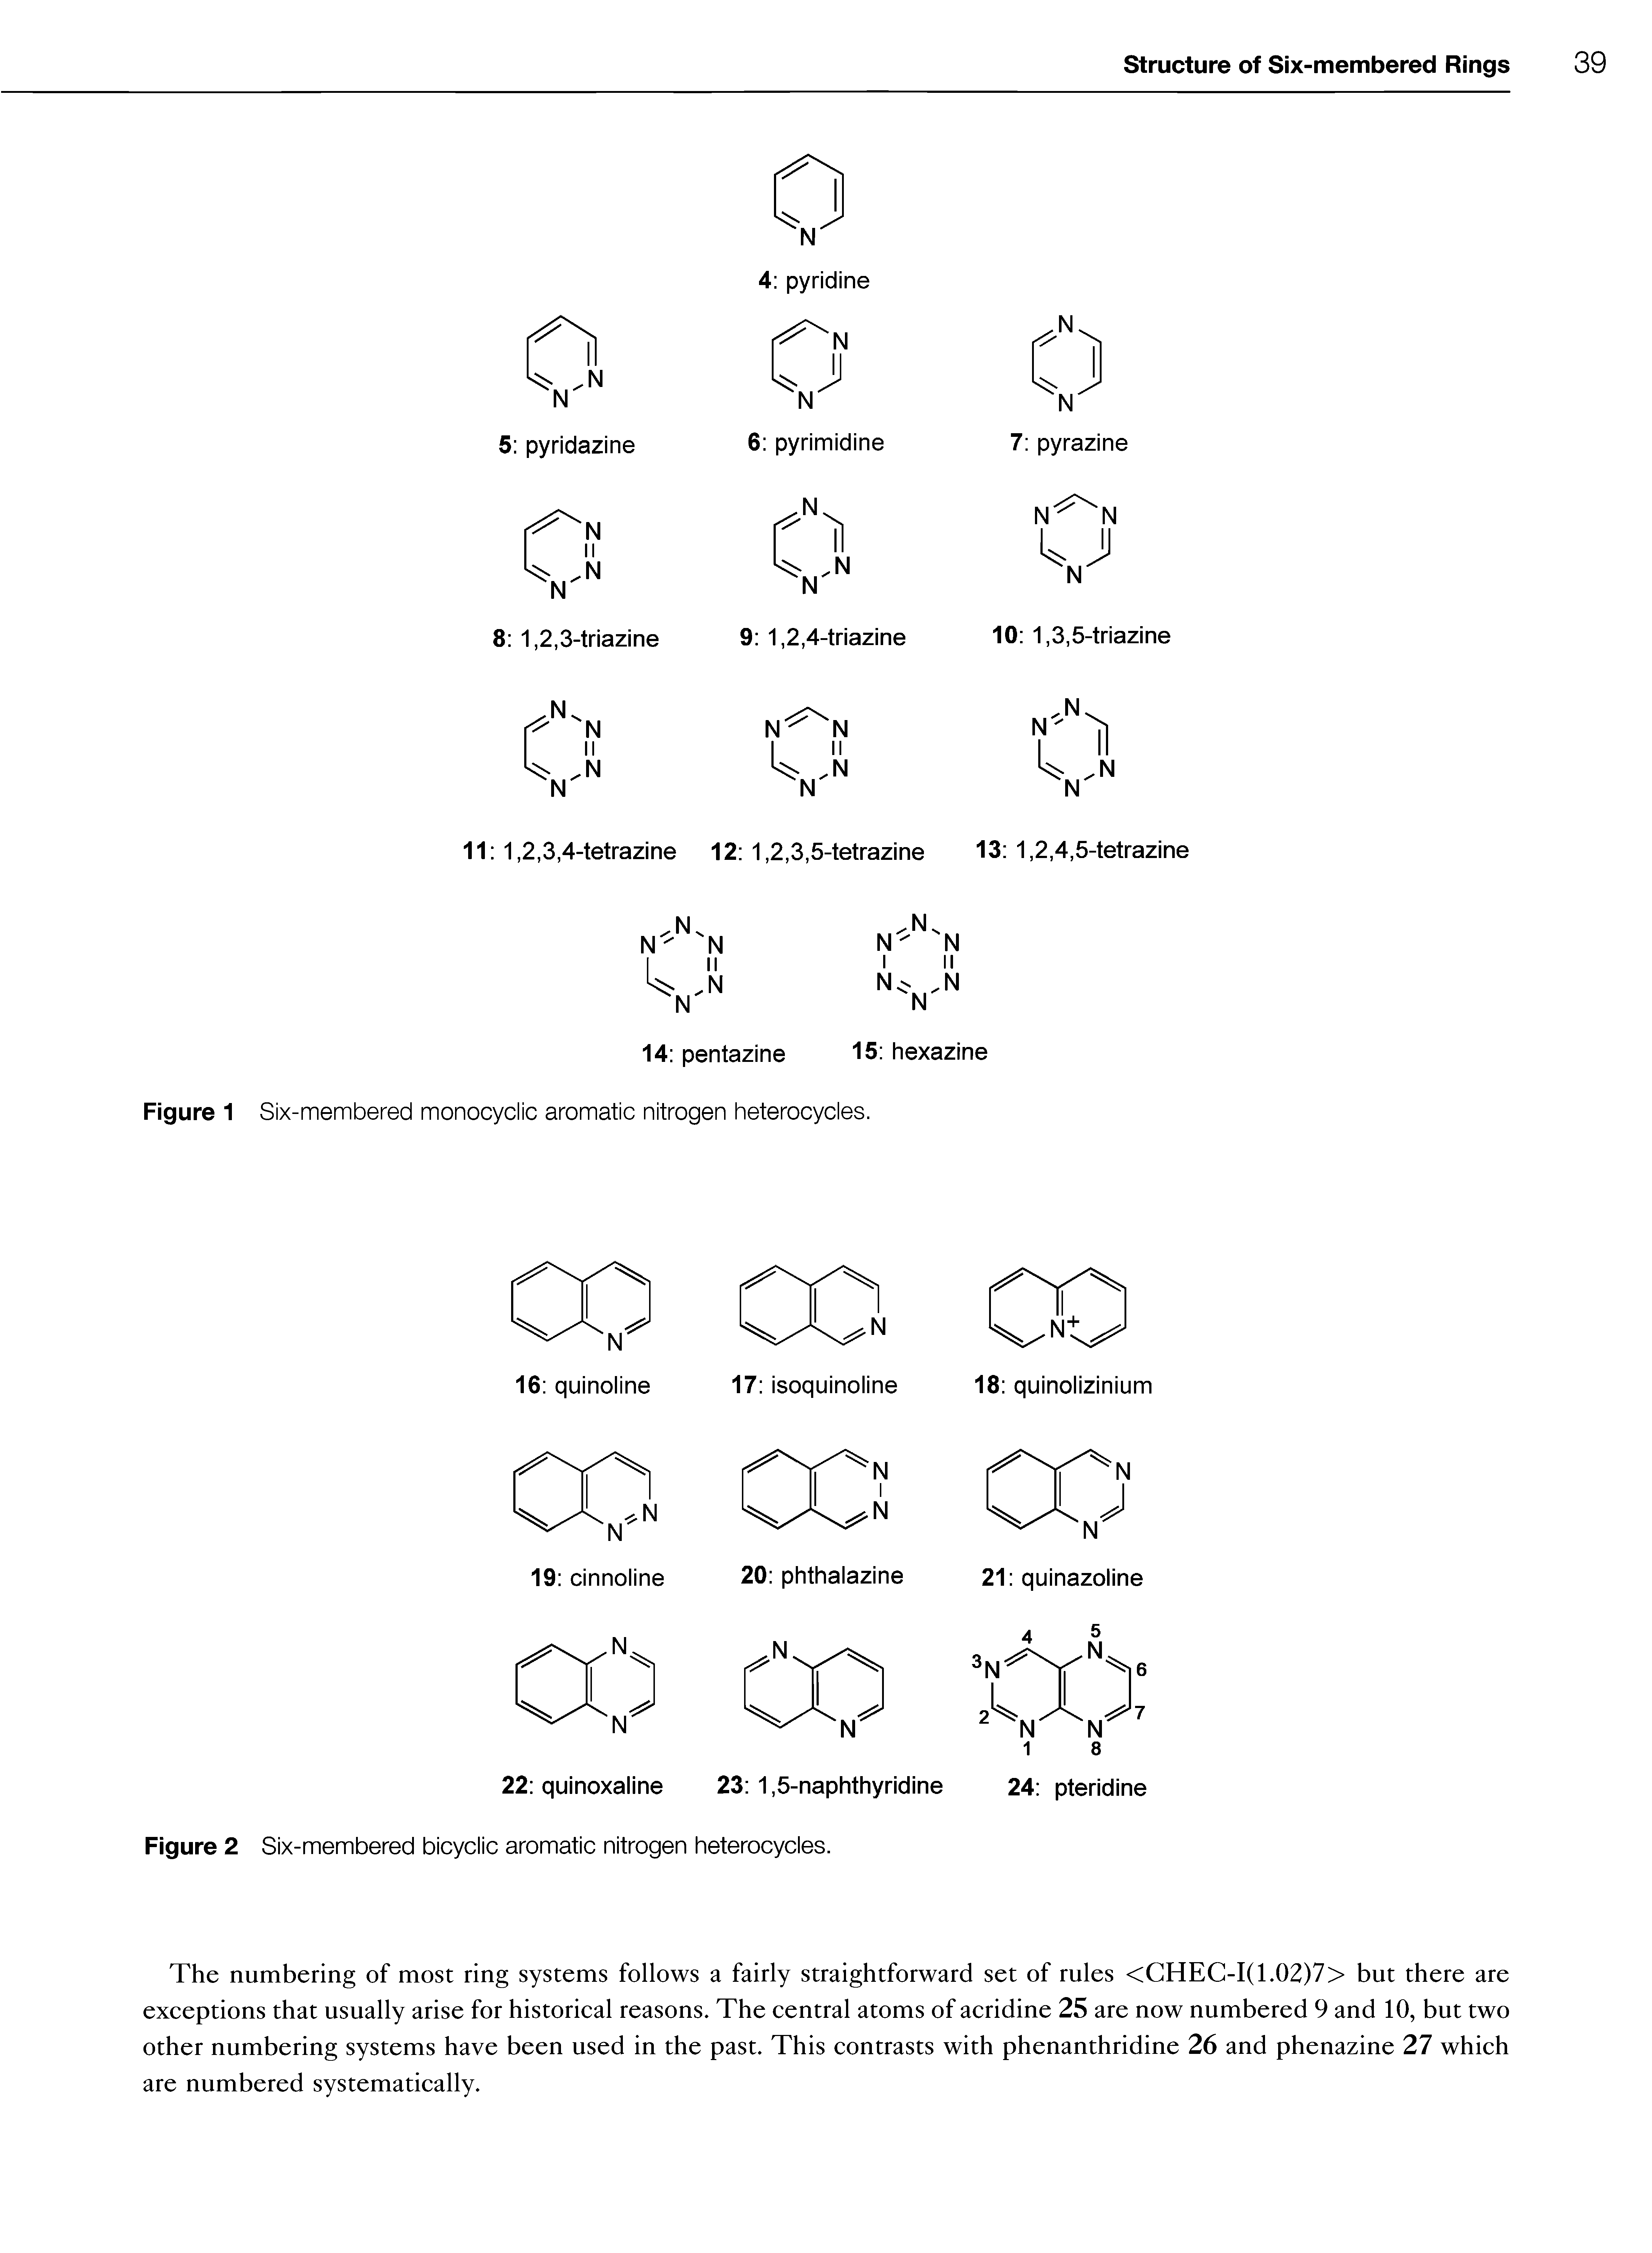 Figure 1 Six-membered monocyclic aromatic nitrogen heterocycles.